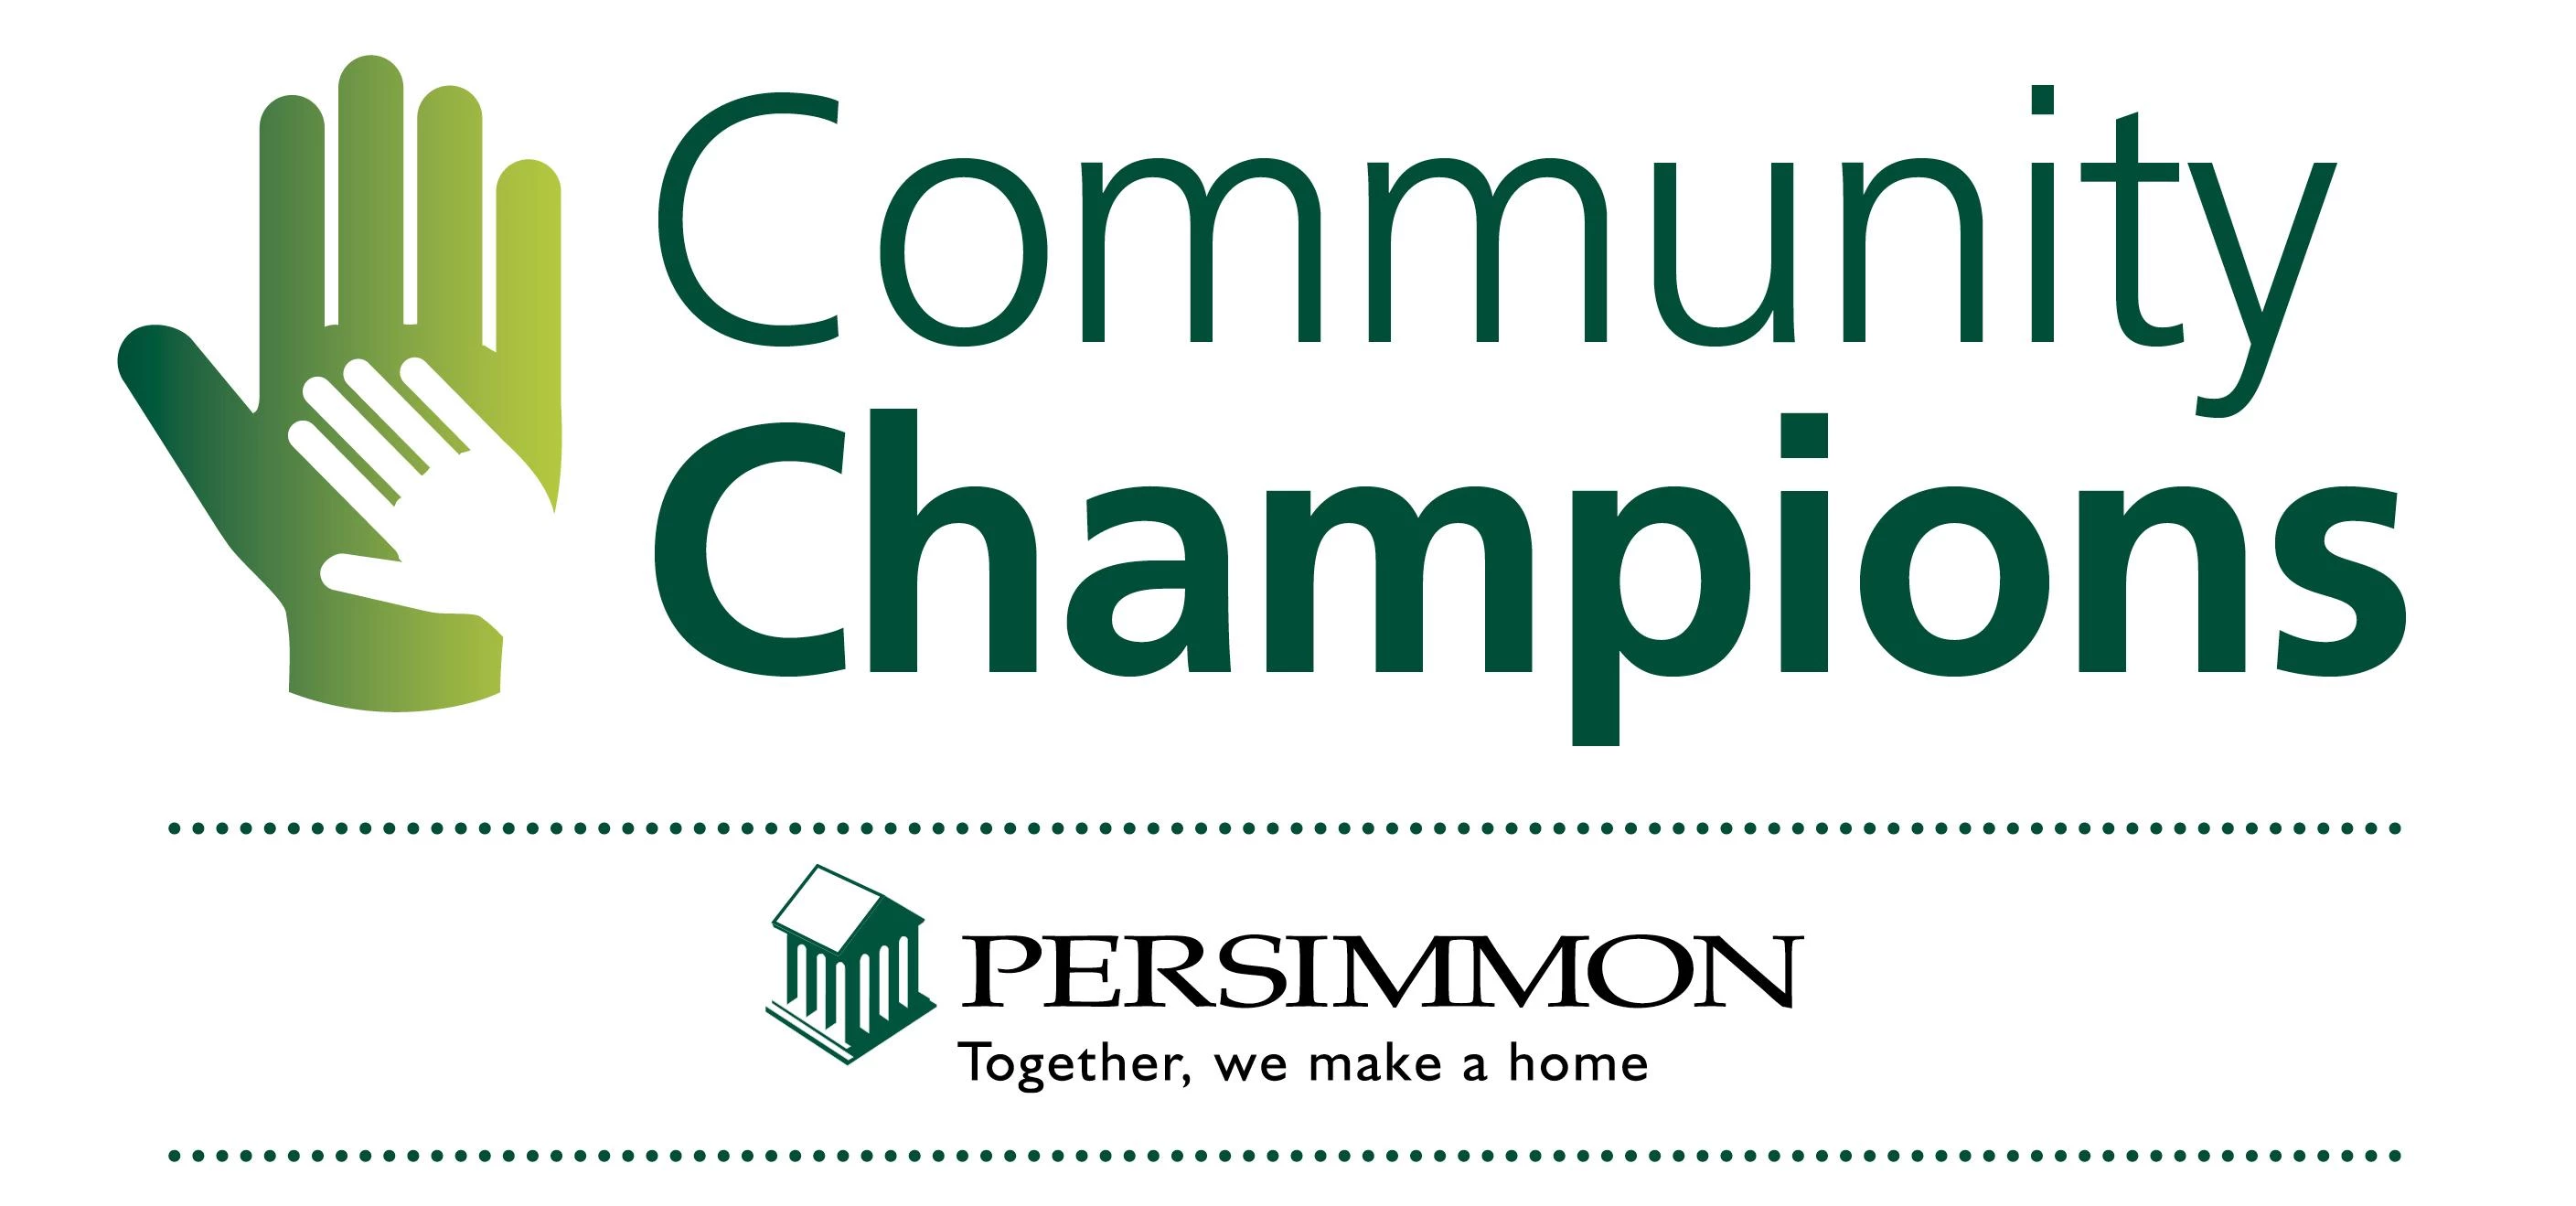 Persimmon Homes Community Champions scheme